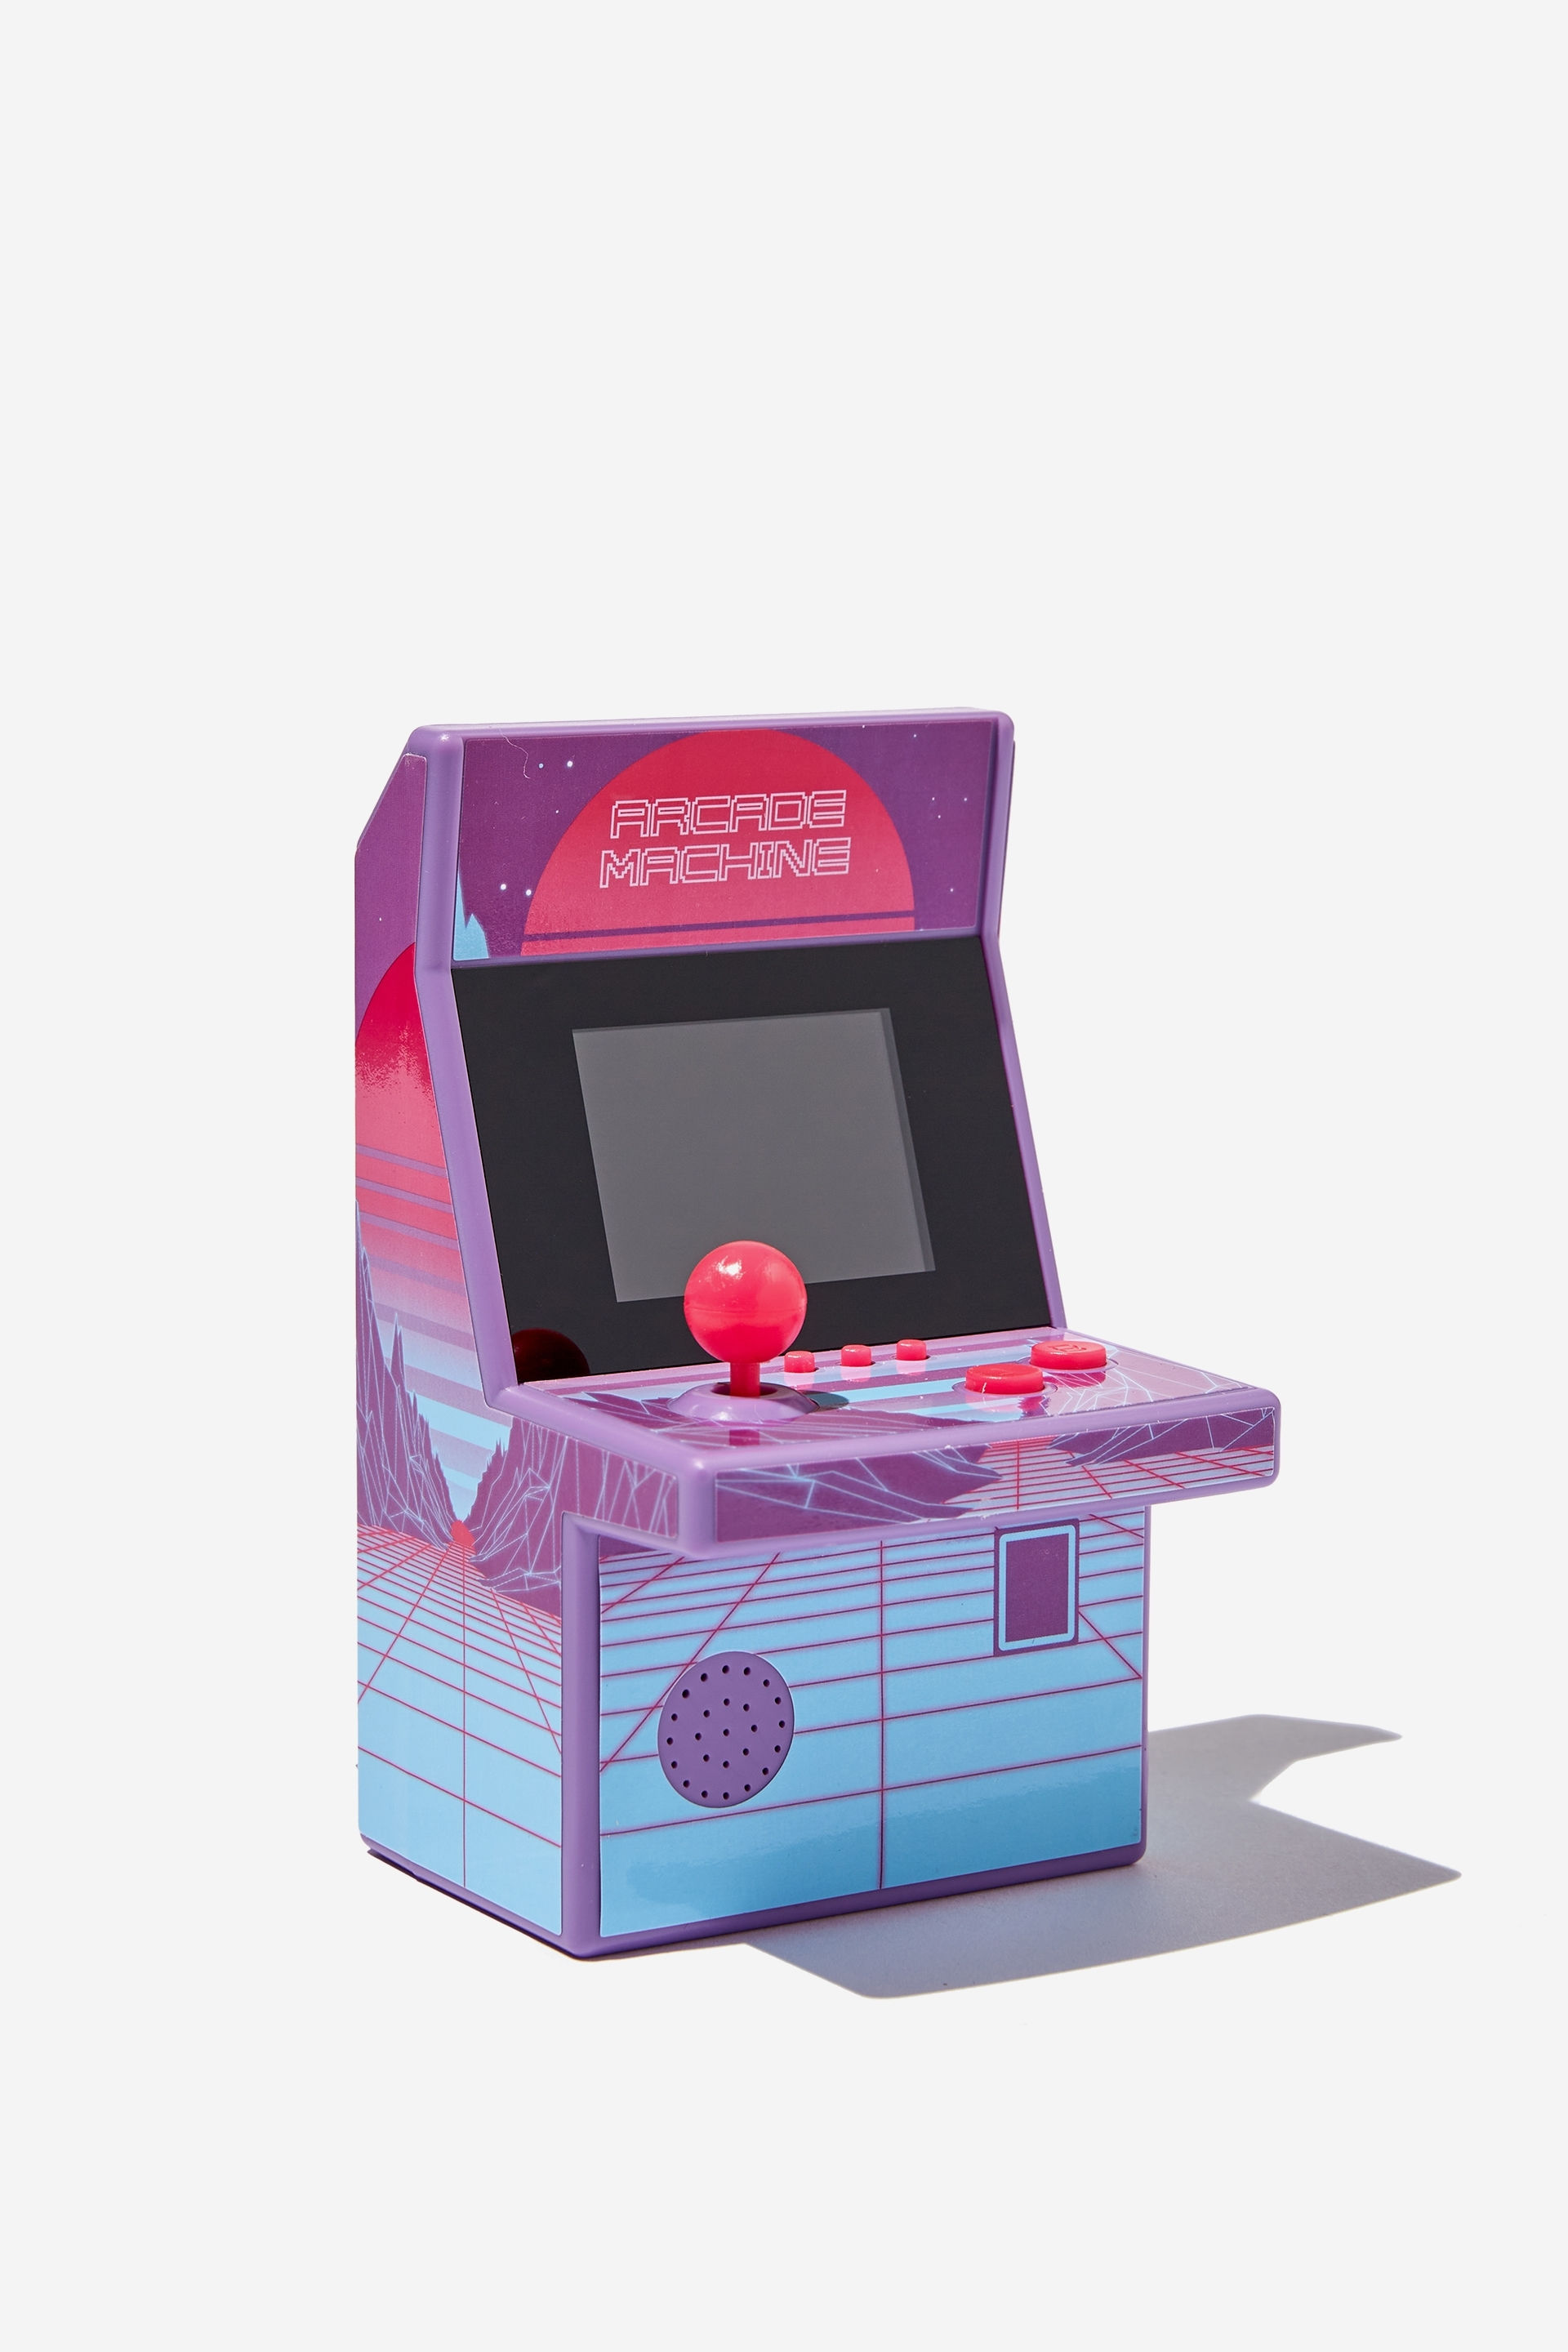 Typo - Arcade Gamer - Post it purple